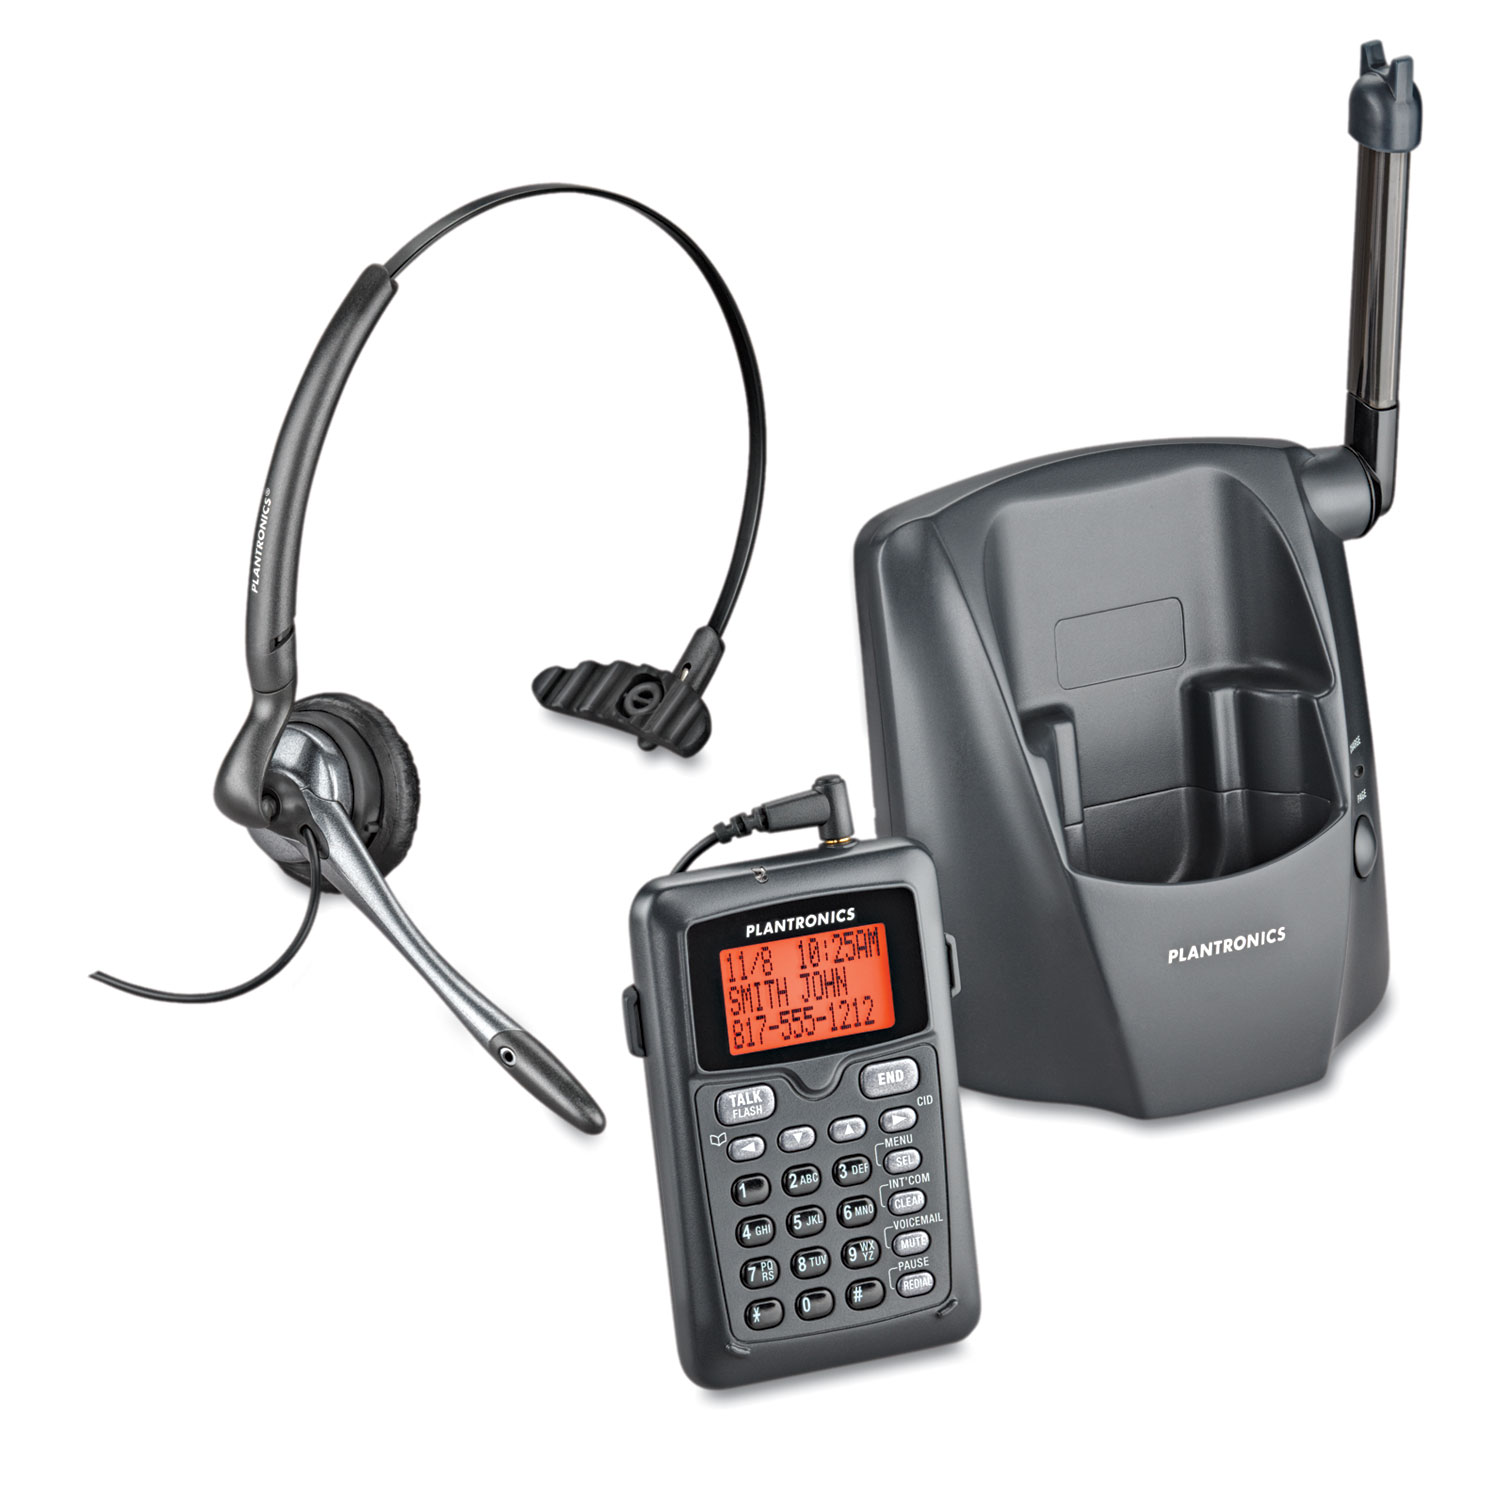  Plantronics 80057-01 DECT 6.0 Cordless Headset Telephone (PLNCT14) 